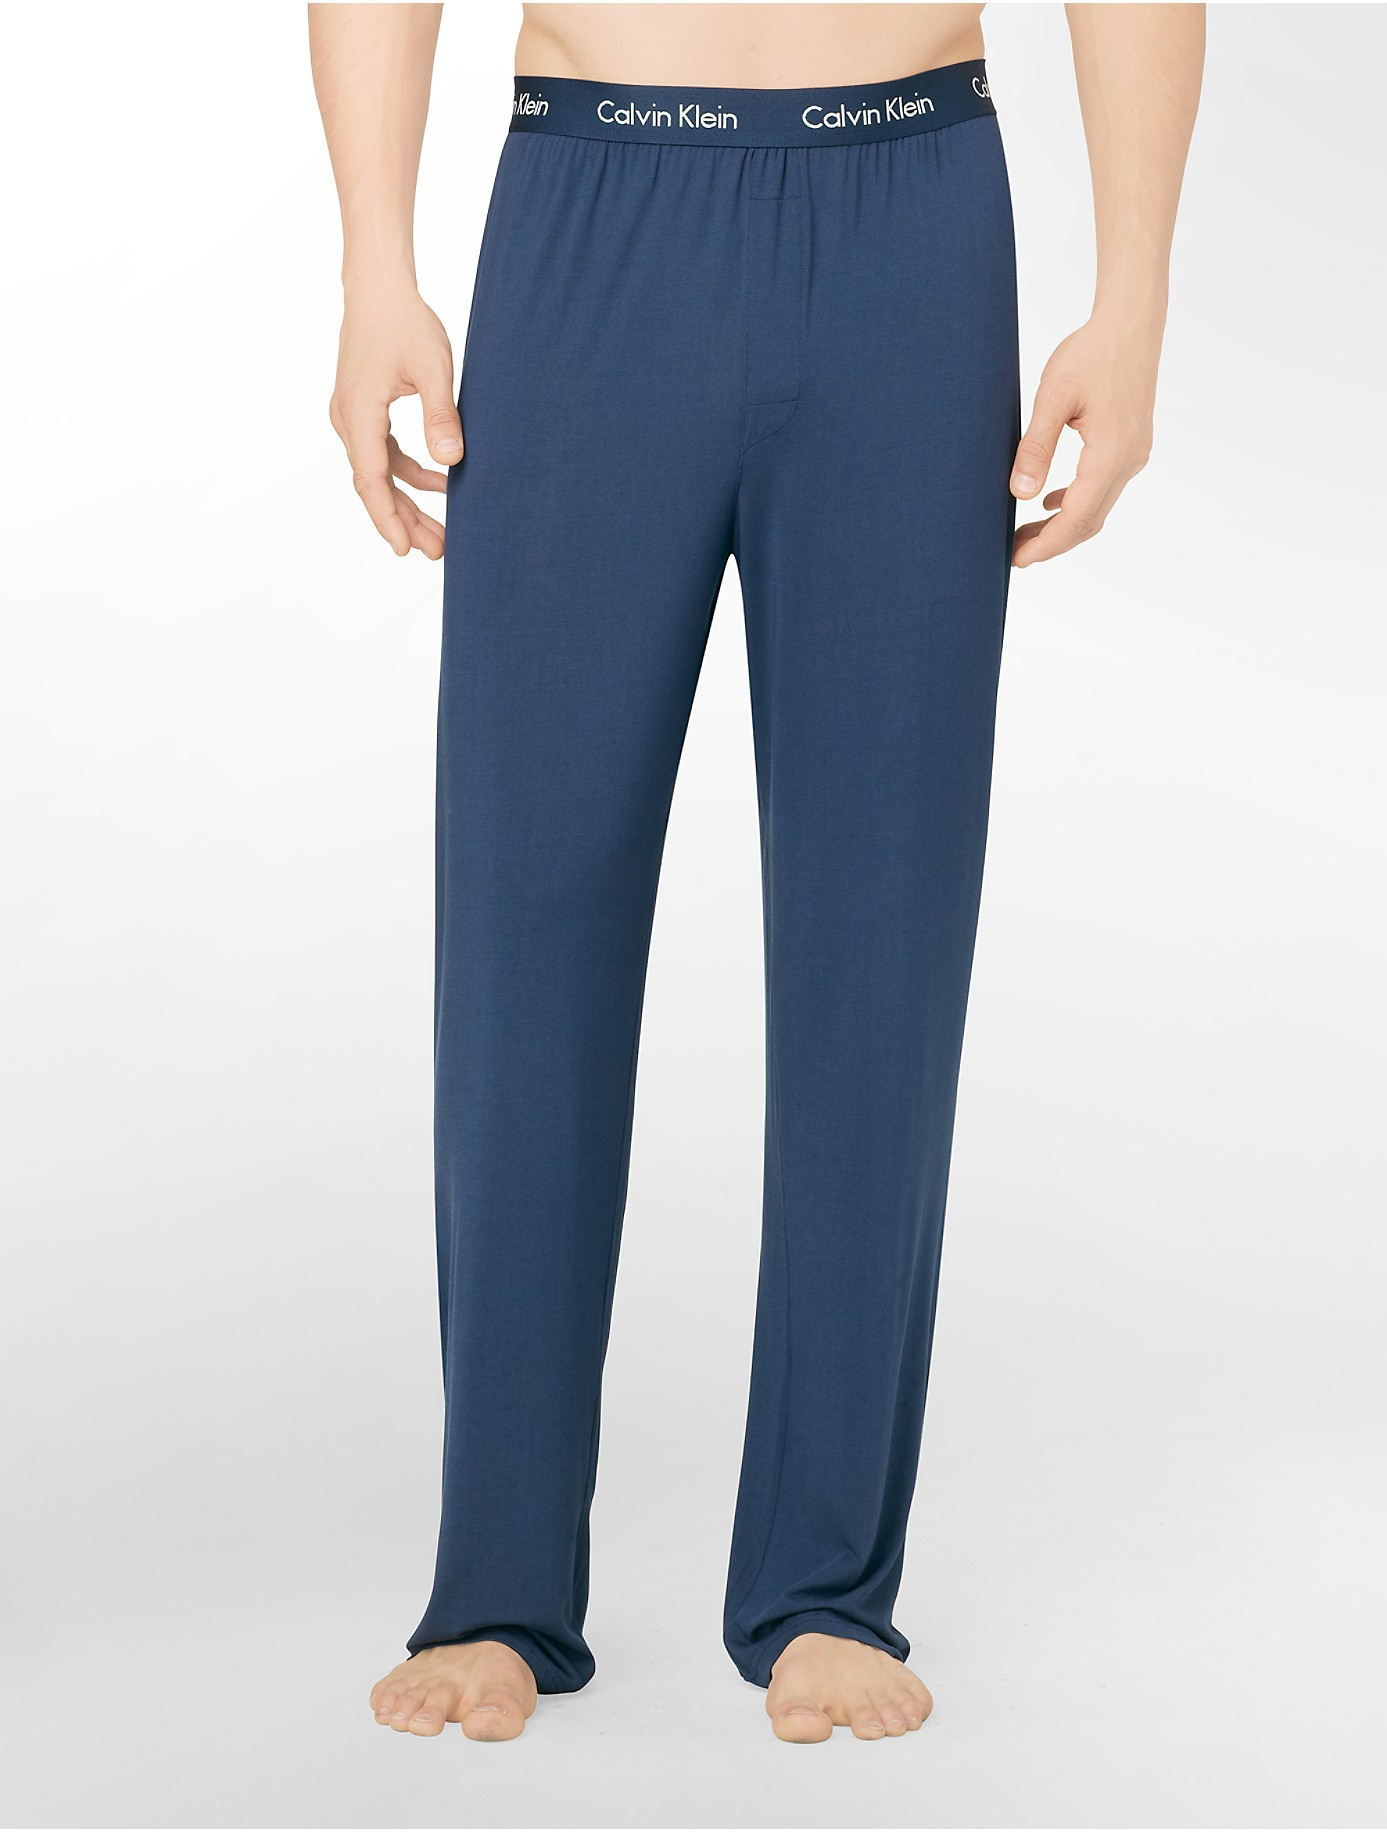 Calvin klein Underwear Body Modal Pajama Pant in Blue for Men | Lyst